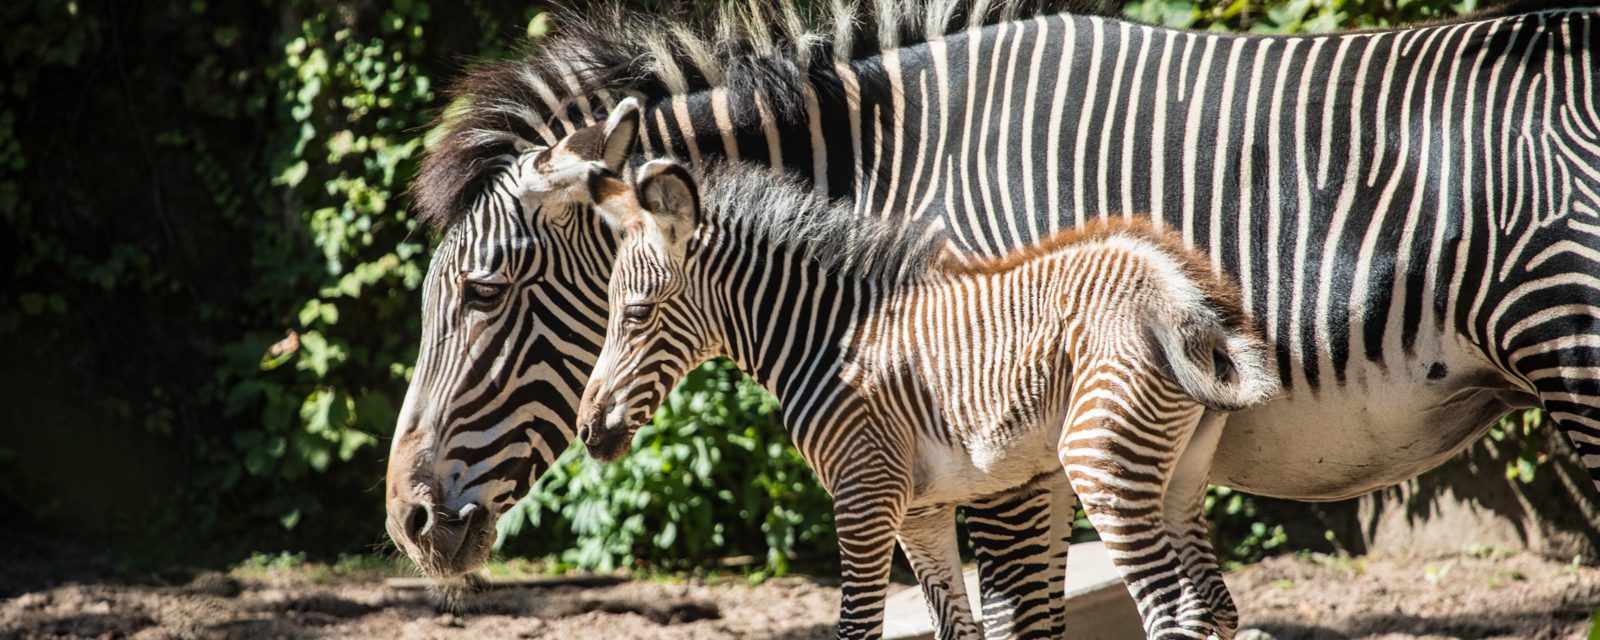 Endangered Grevy’s Zebra Born at Lincoln Park Zoo